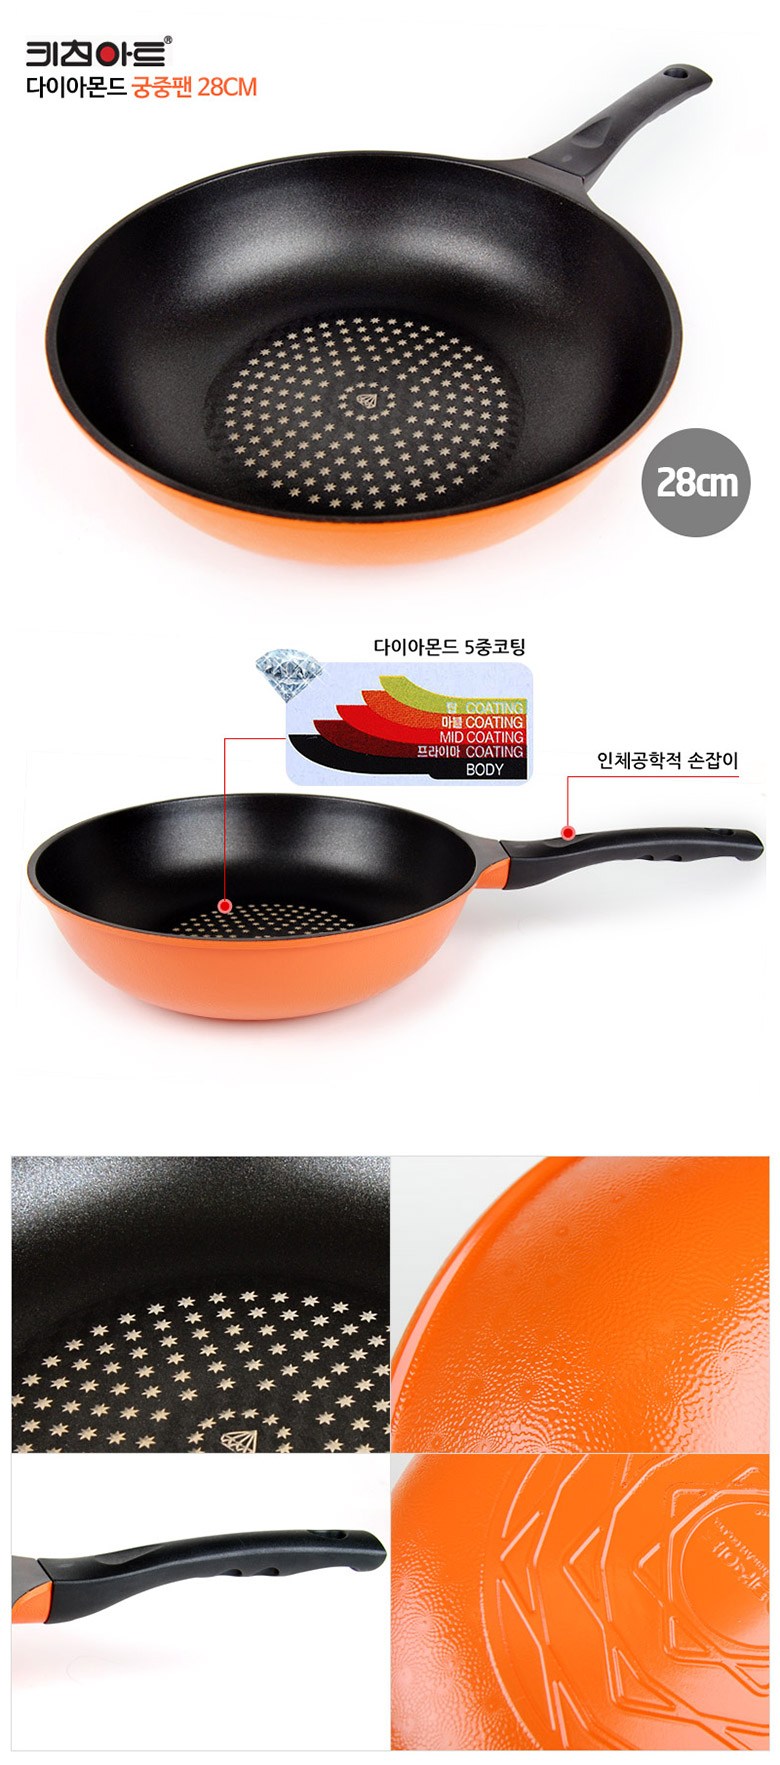 bone KitchenArt Wok Pan Made in Korea Non-Stick Diamond Coating 9.4~12.6 inch 